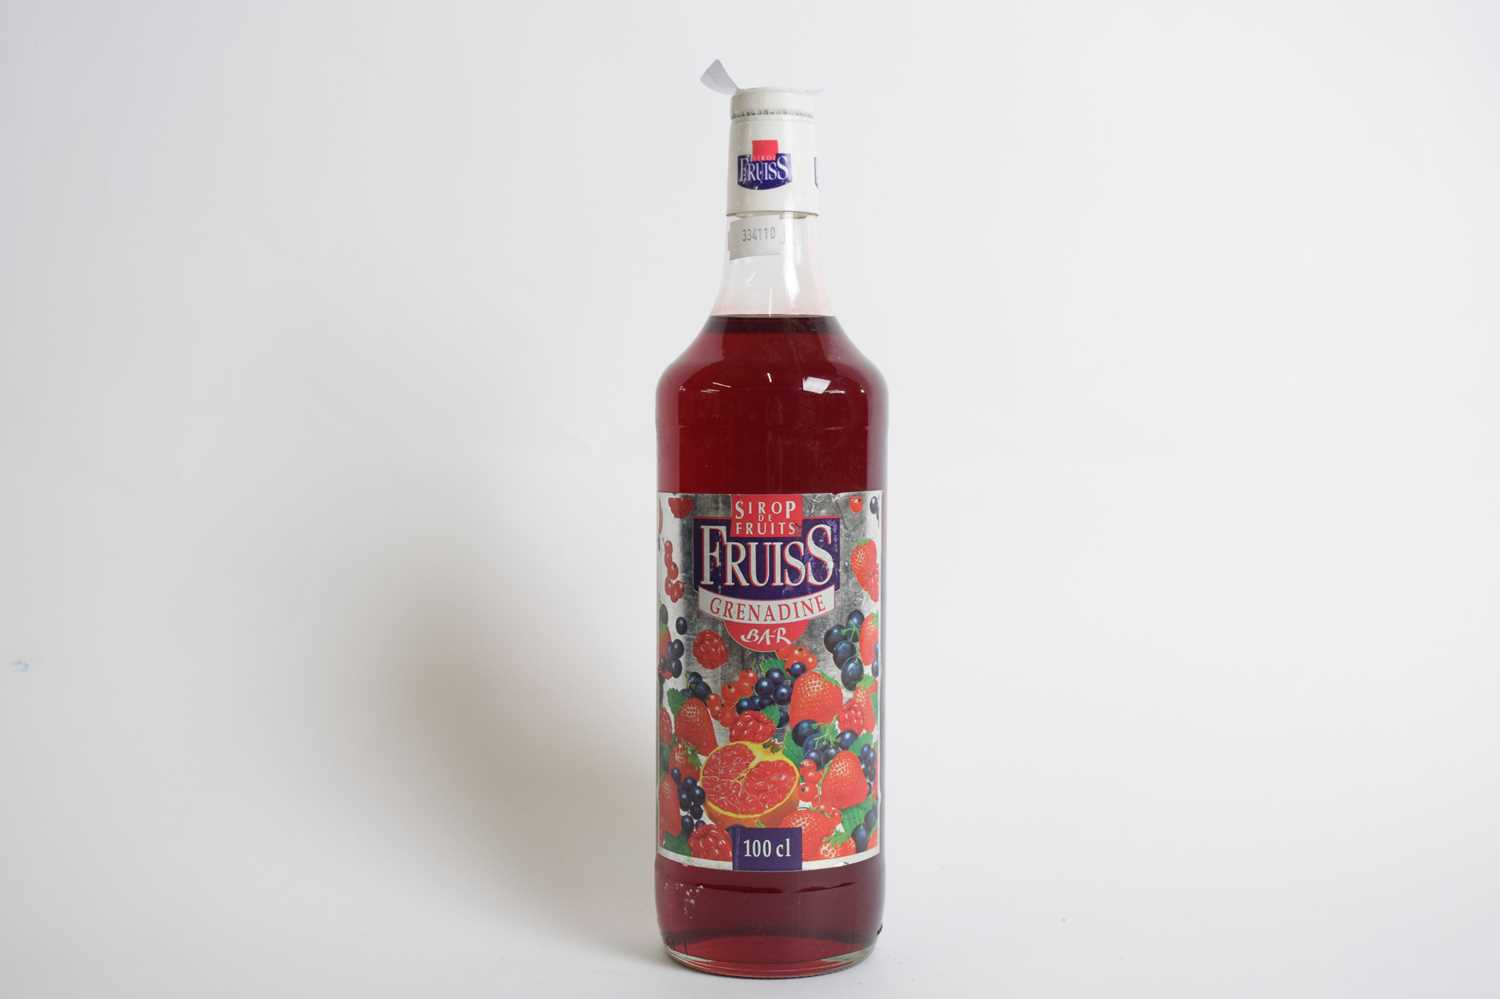 One bottle Fruiss Grenadine, 100cl - Image 2 of 2